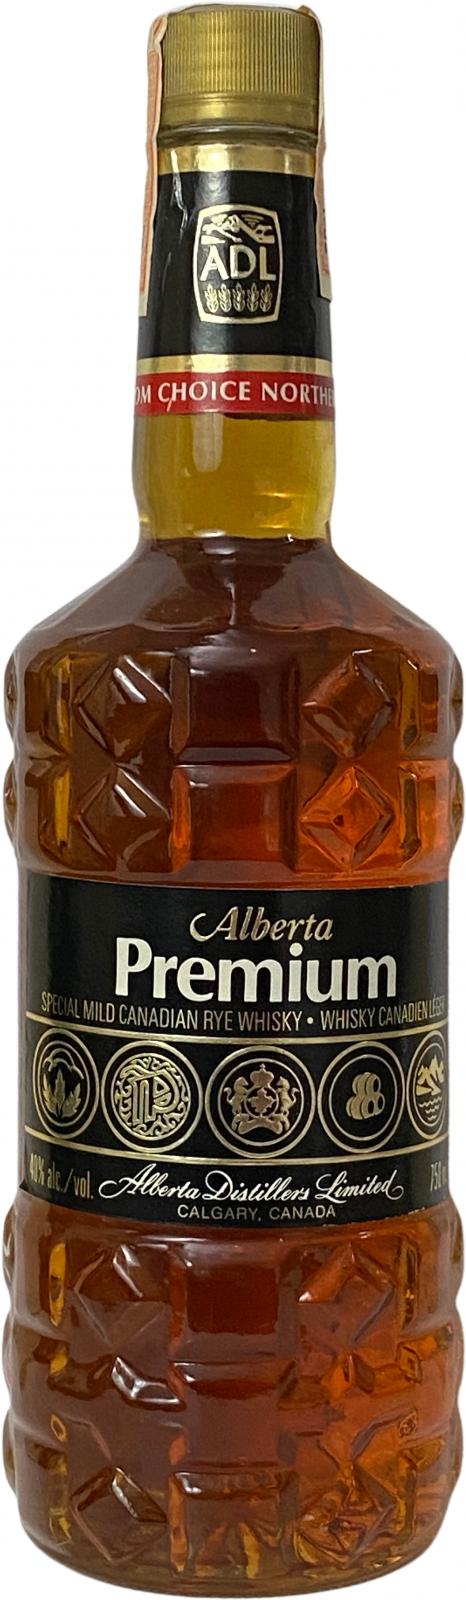 Alberta Premium Special Mild Canadian Rye Whisky Seasoned Oak Casks 40% 700ml